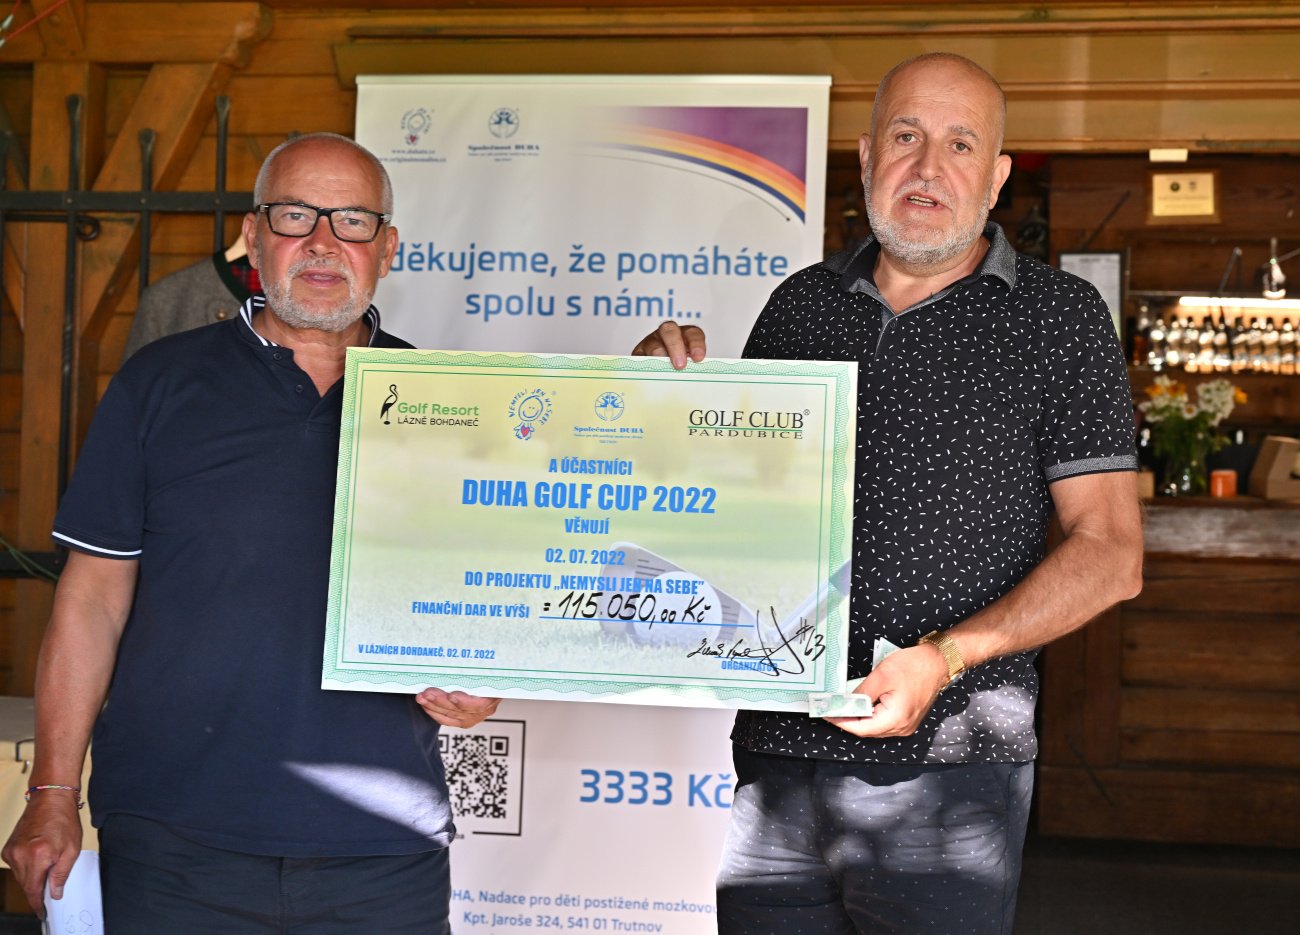 DUHA Golf Cup 2022